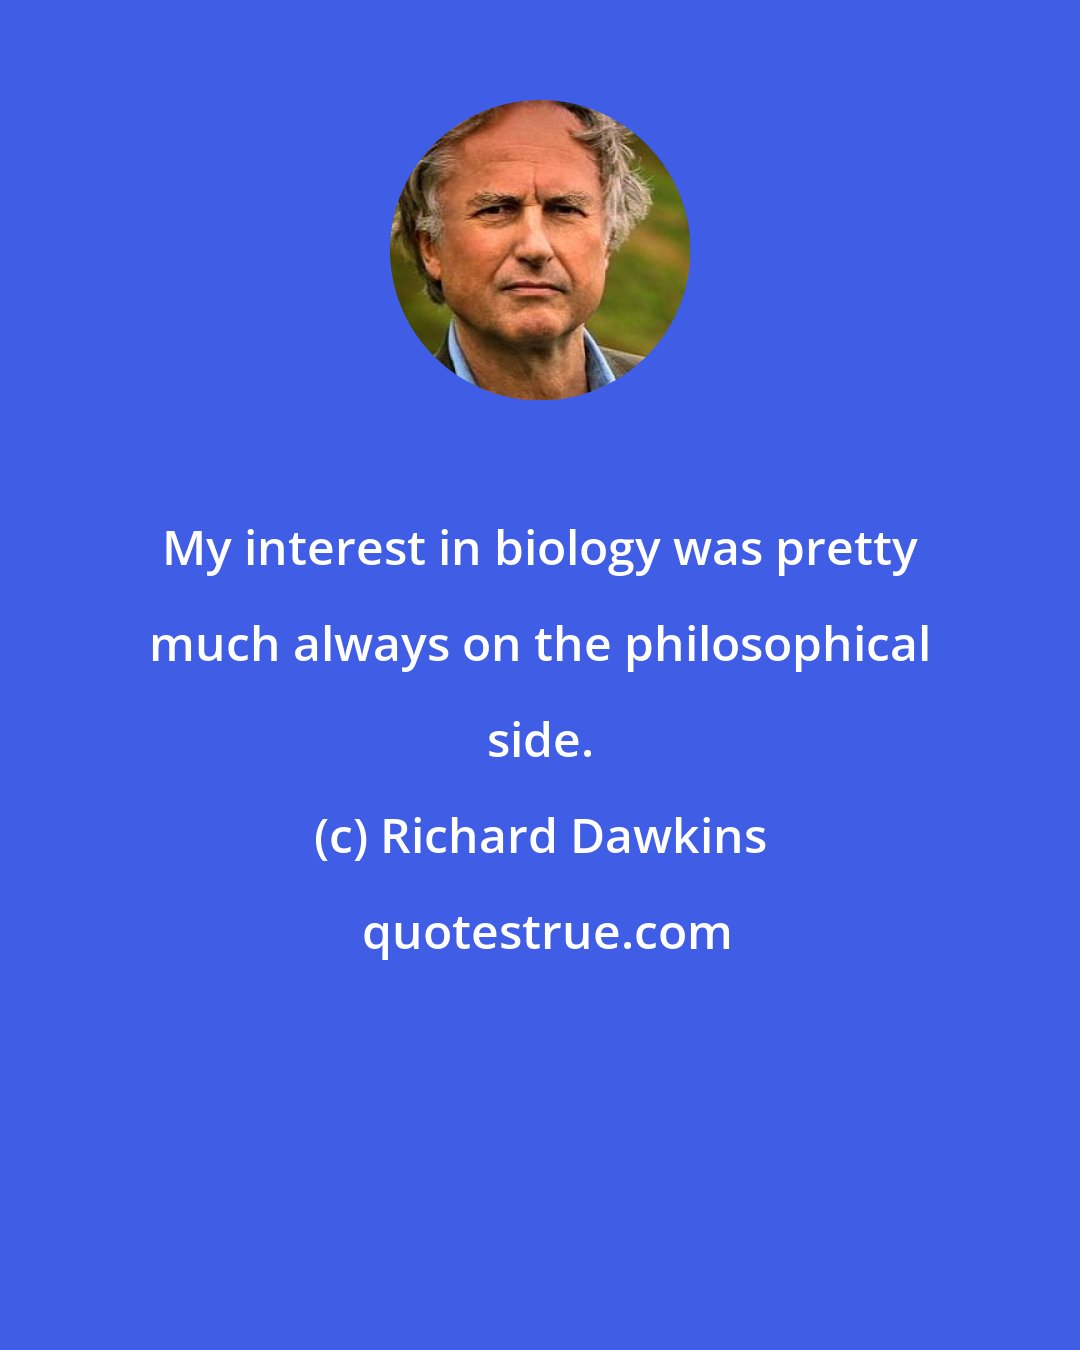 Richard Dawkins: My interest in biology was pretty much always on the philosophical side.